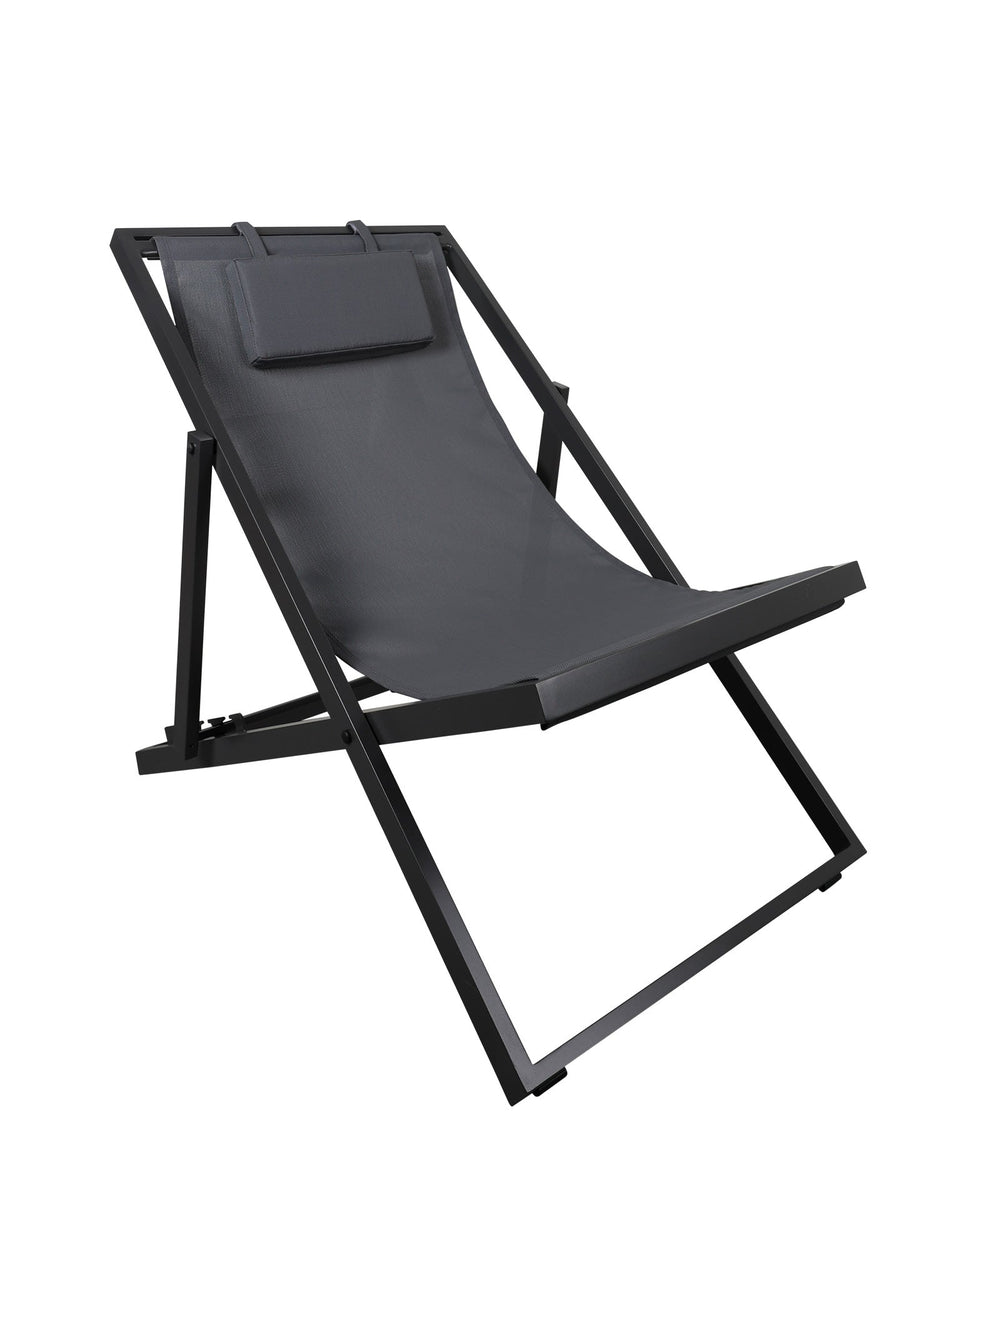 Savuti Deck Chair in Coal - Outdoor Furniture - Chair- Hertex Haus Online - badge_fully_outdoor